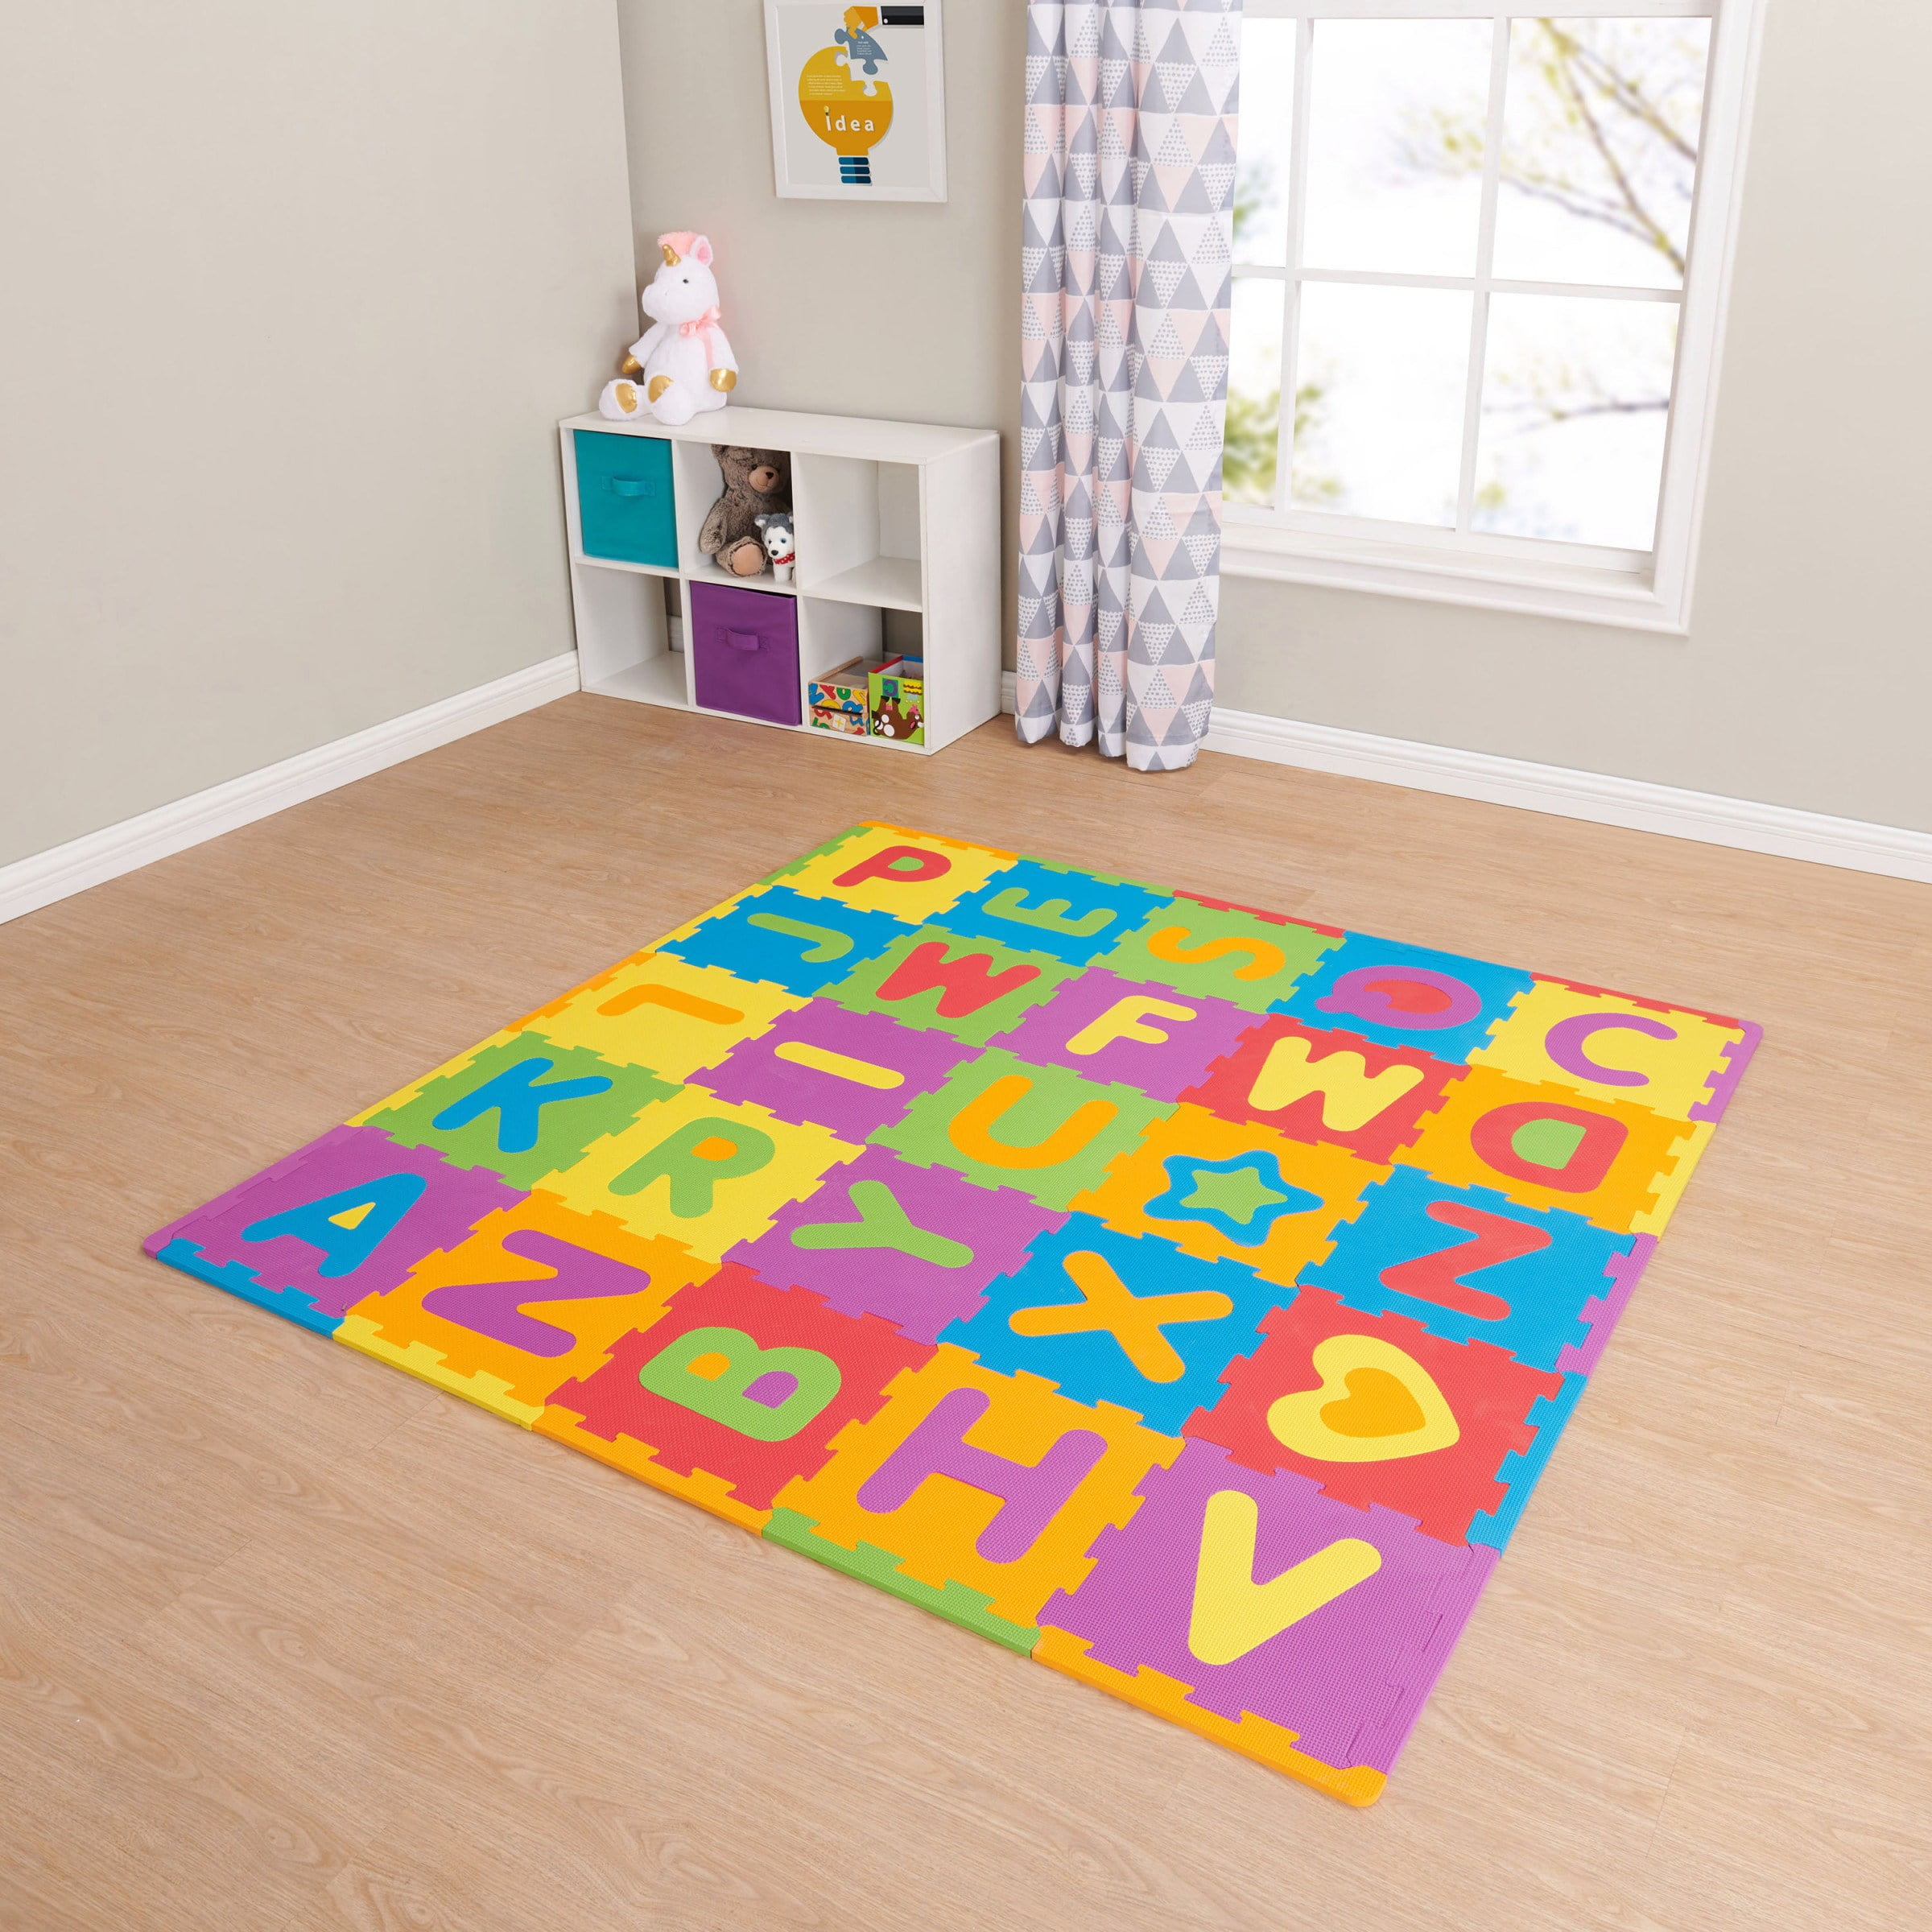 Spark. Create. Imagine. ABC Foam Playmat Learning Toy Set, 28 Pieces -  